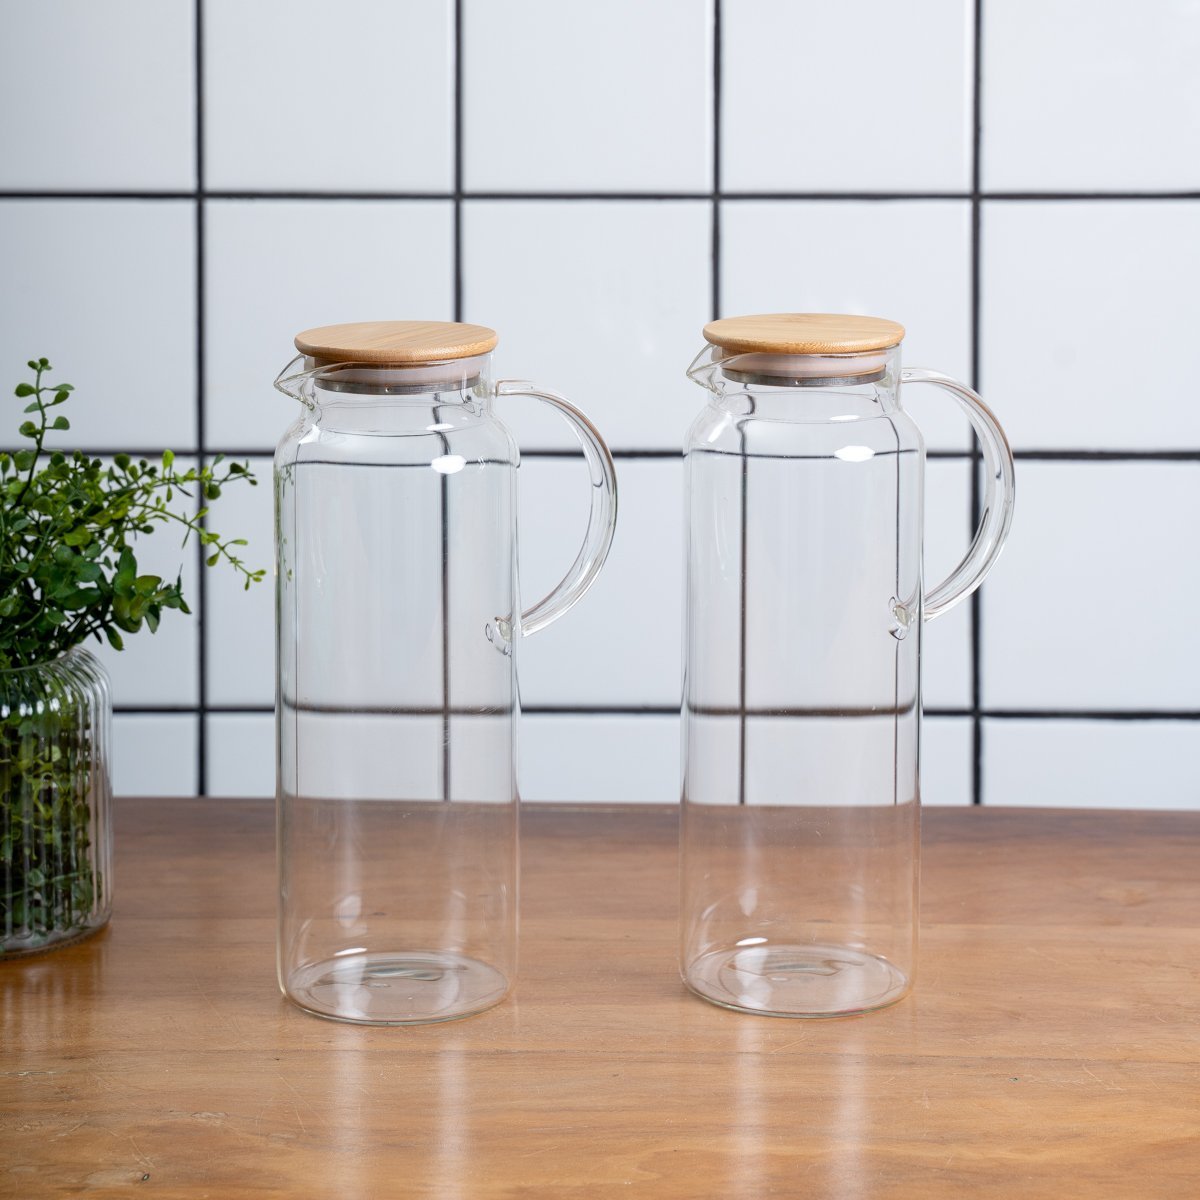 Kit 2 jarras de vidro borossilicato suco com tampa de bambu 2L - Oikos - 5